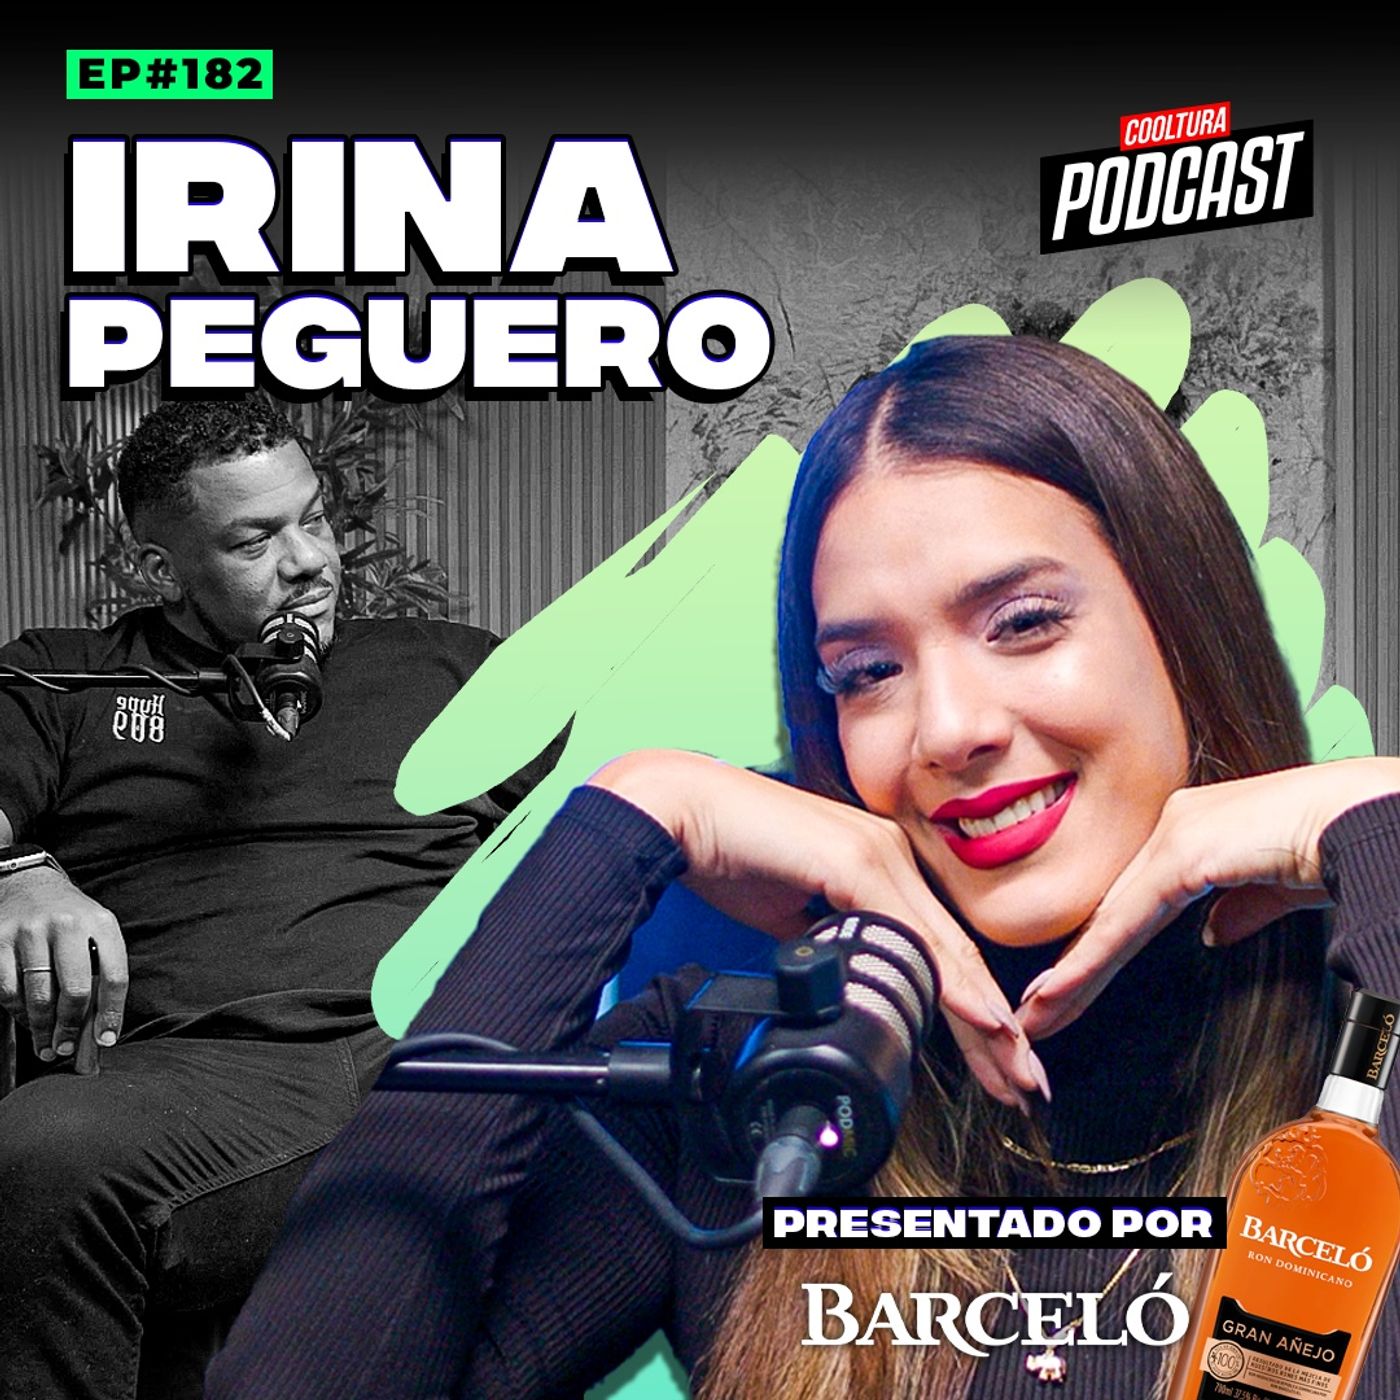 EP. 182 – Irina Peguero, la virgen de los medios | #CoolturaPodcast